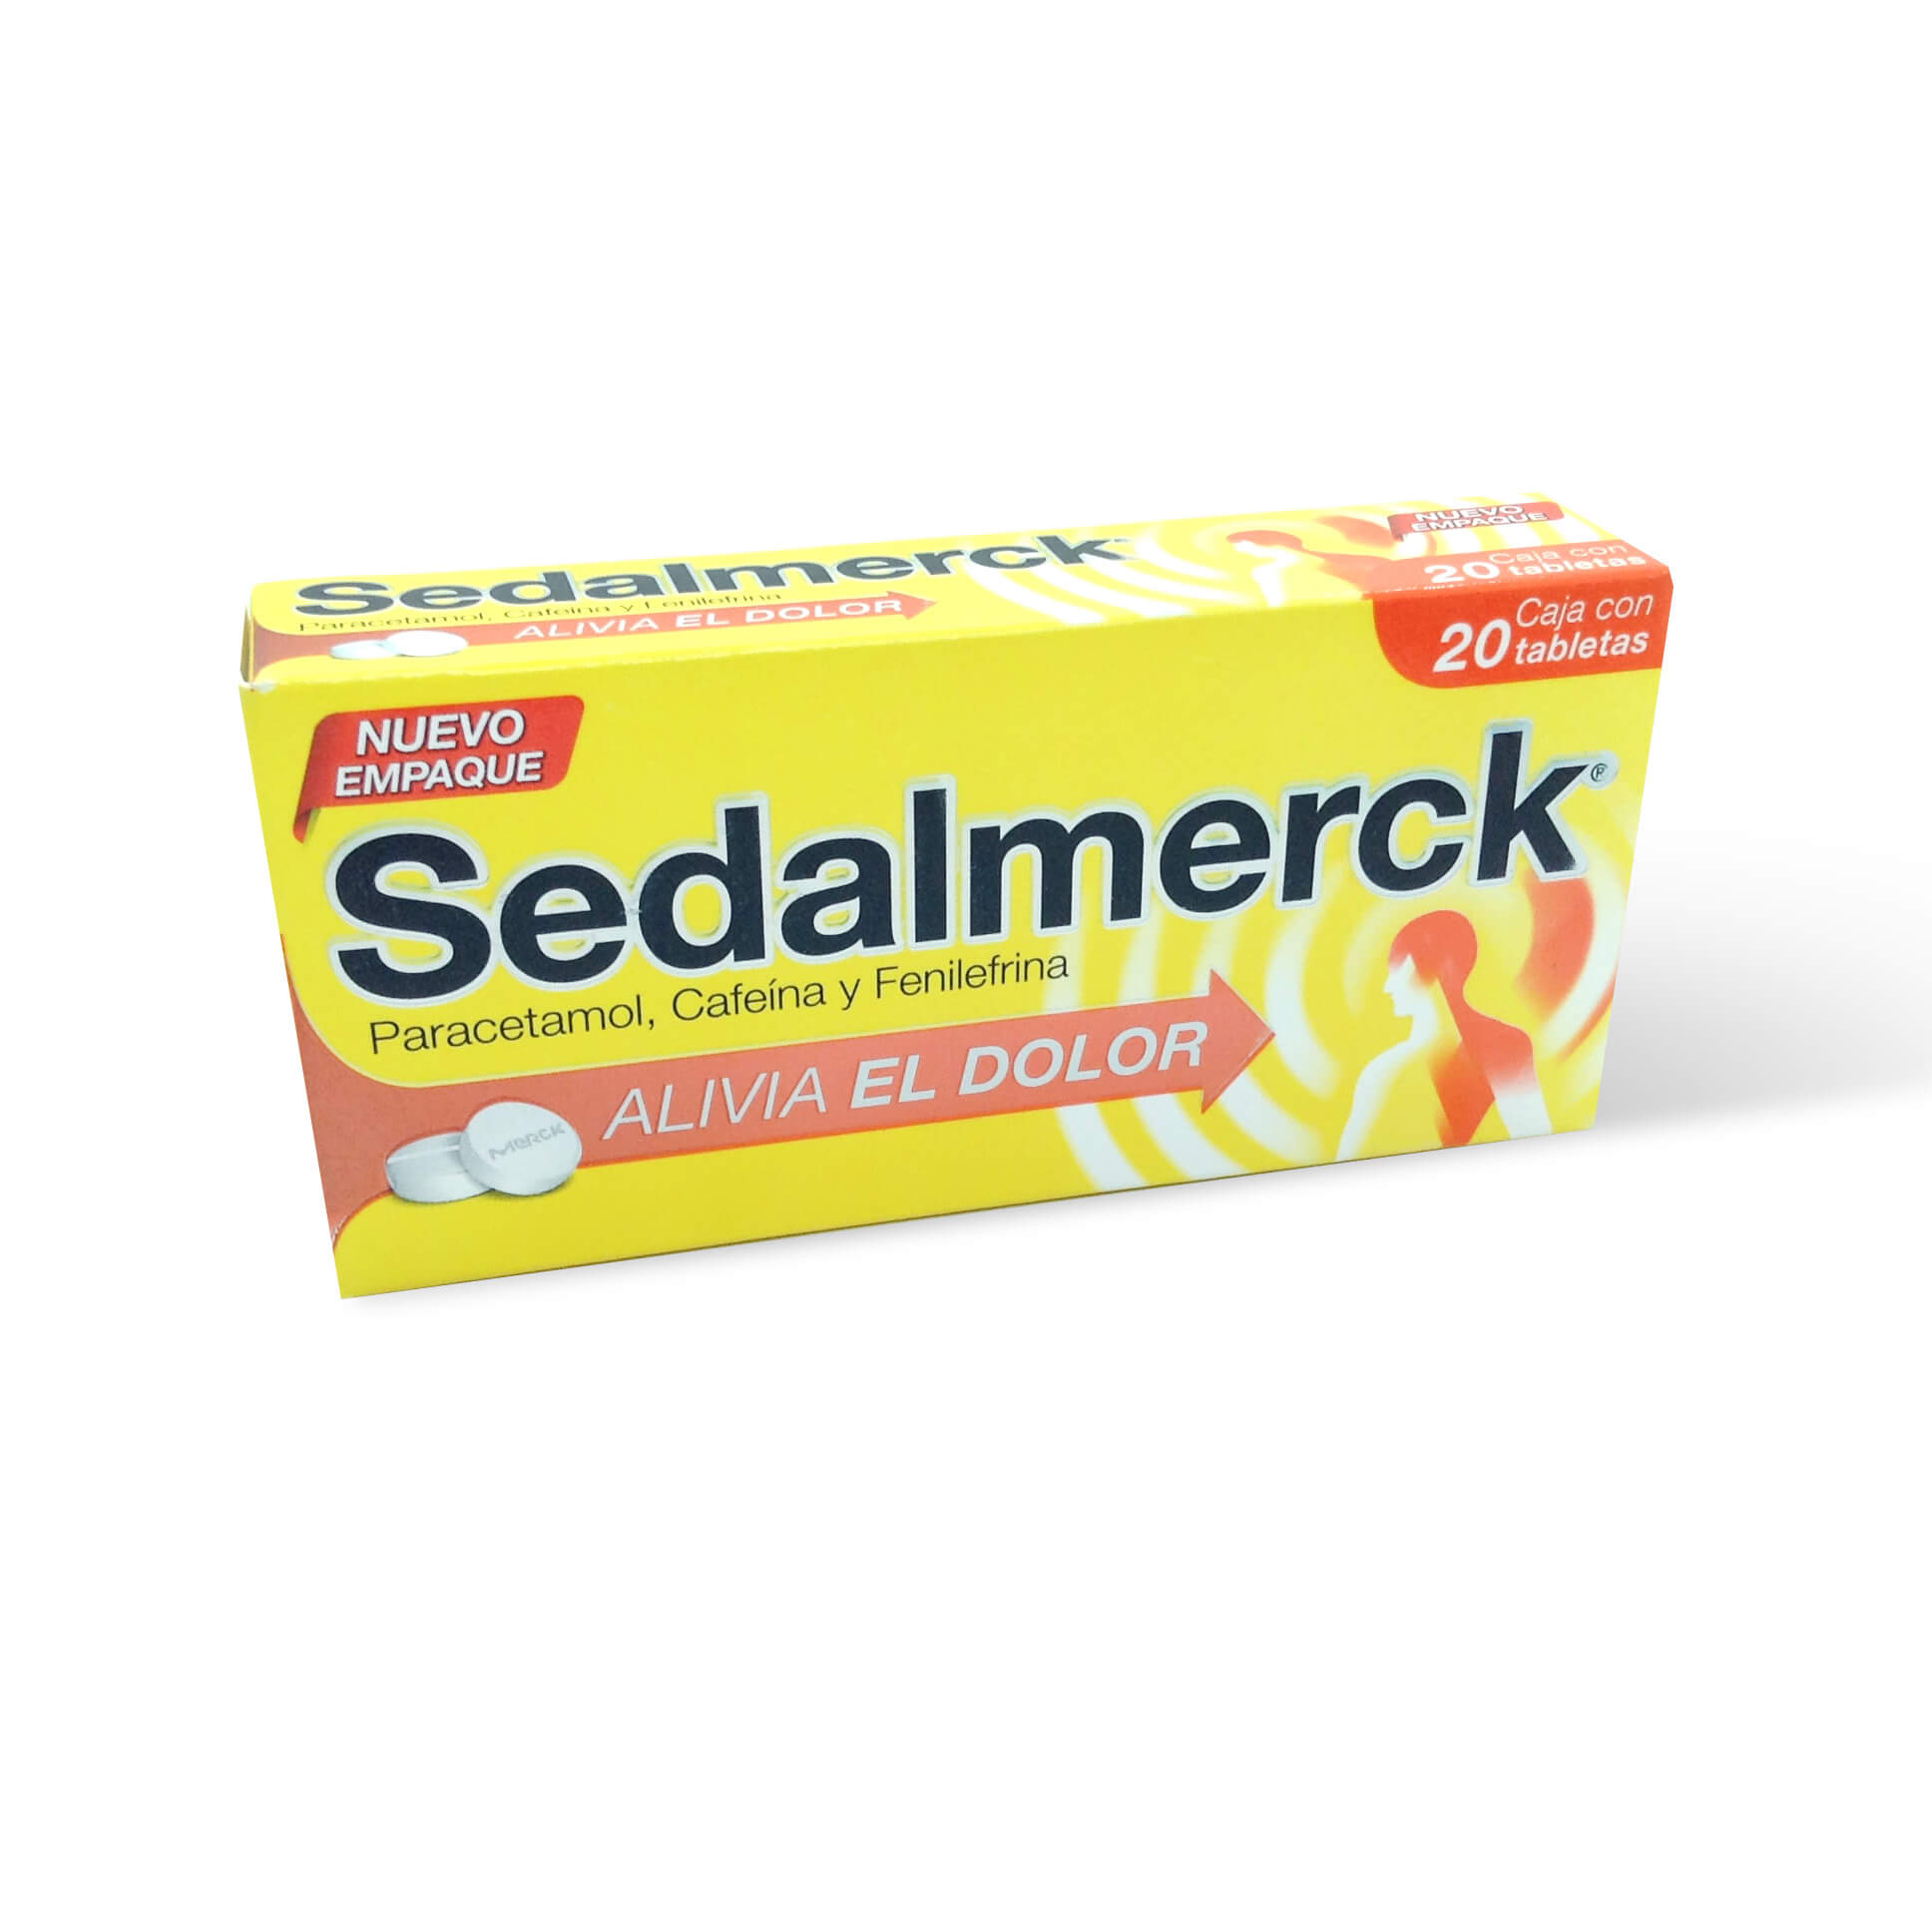 Sedalmerck